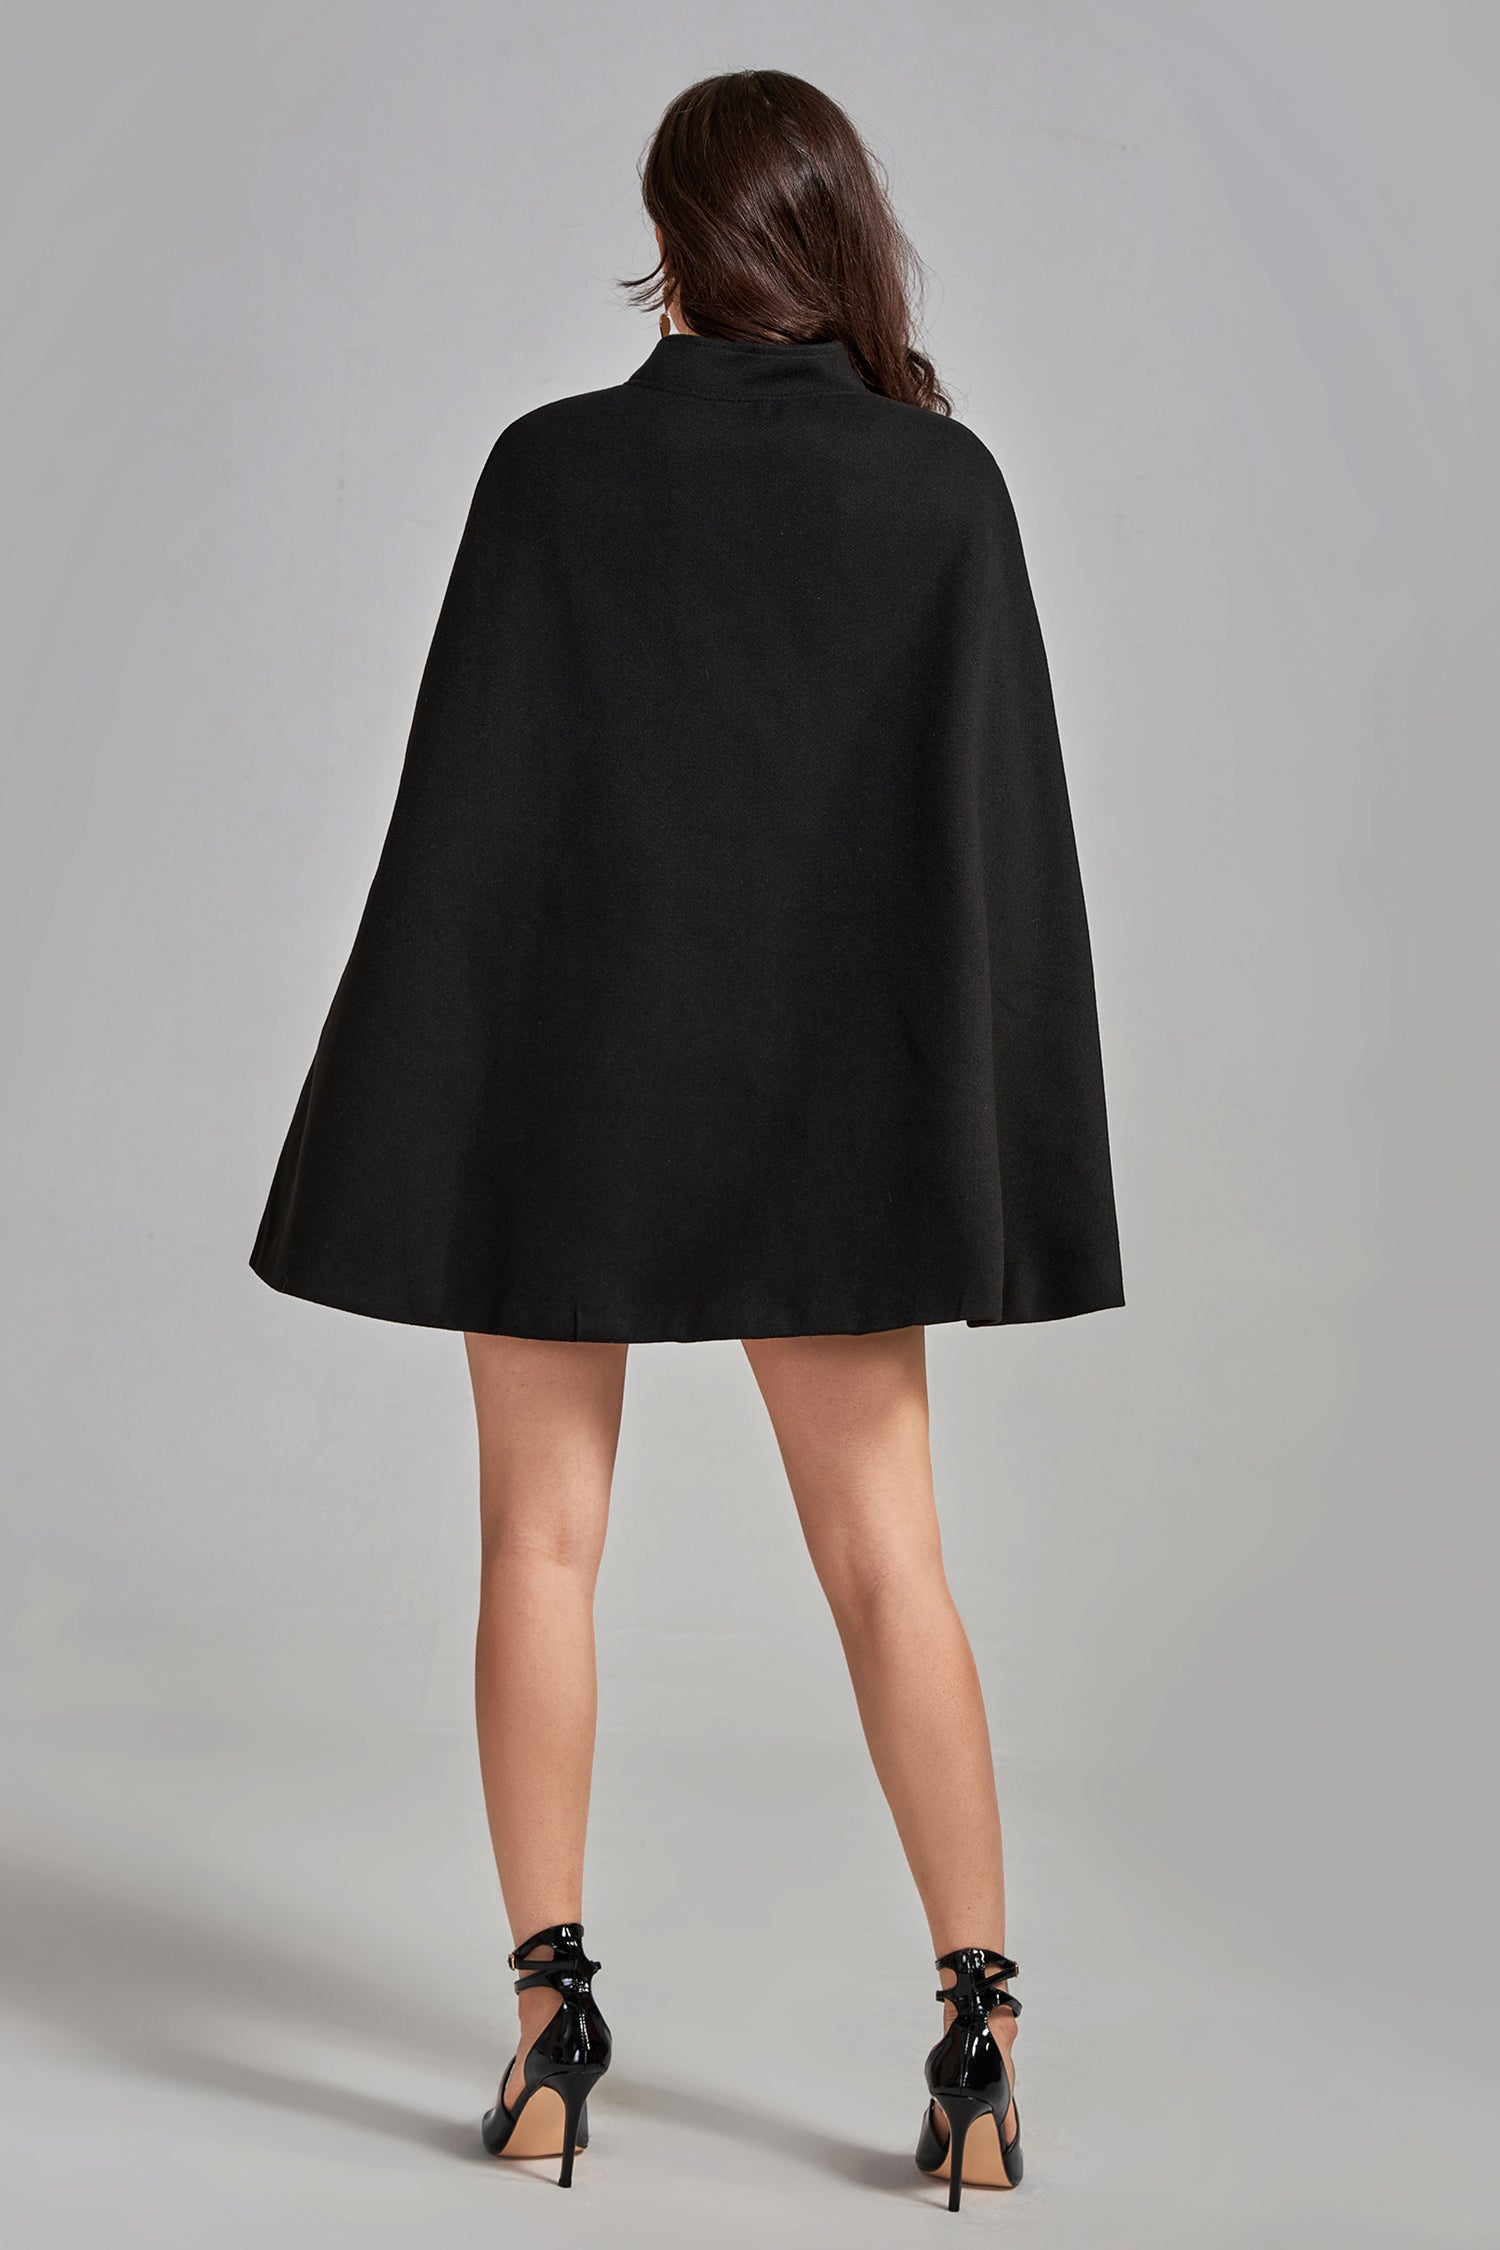 Meryl Cloak Style Dress